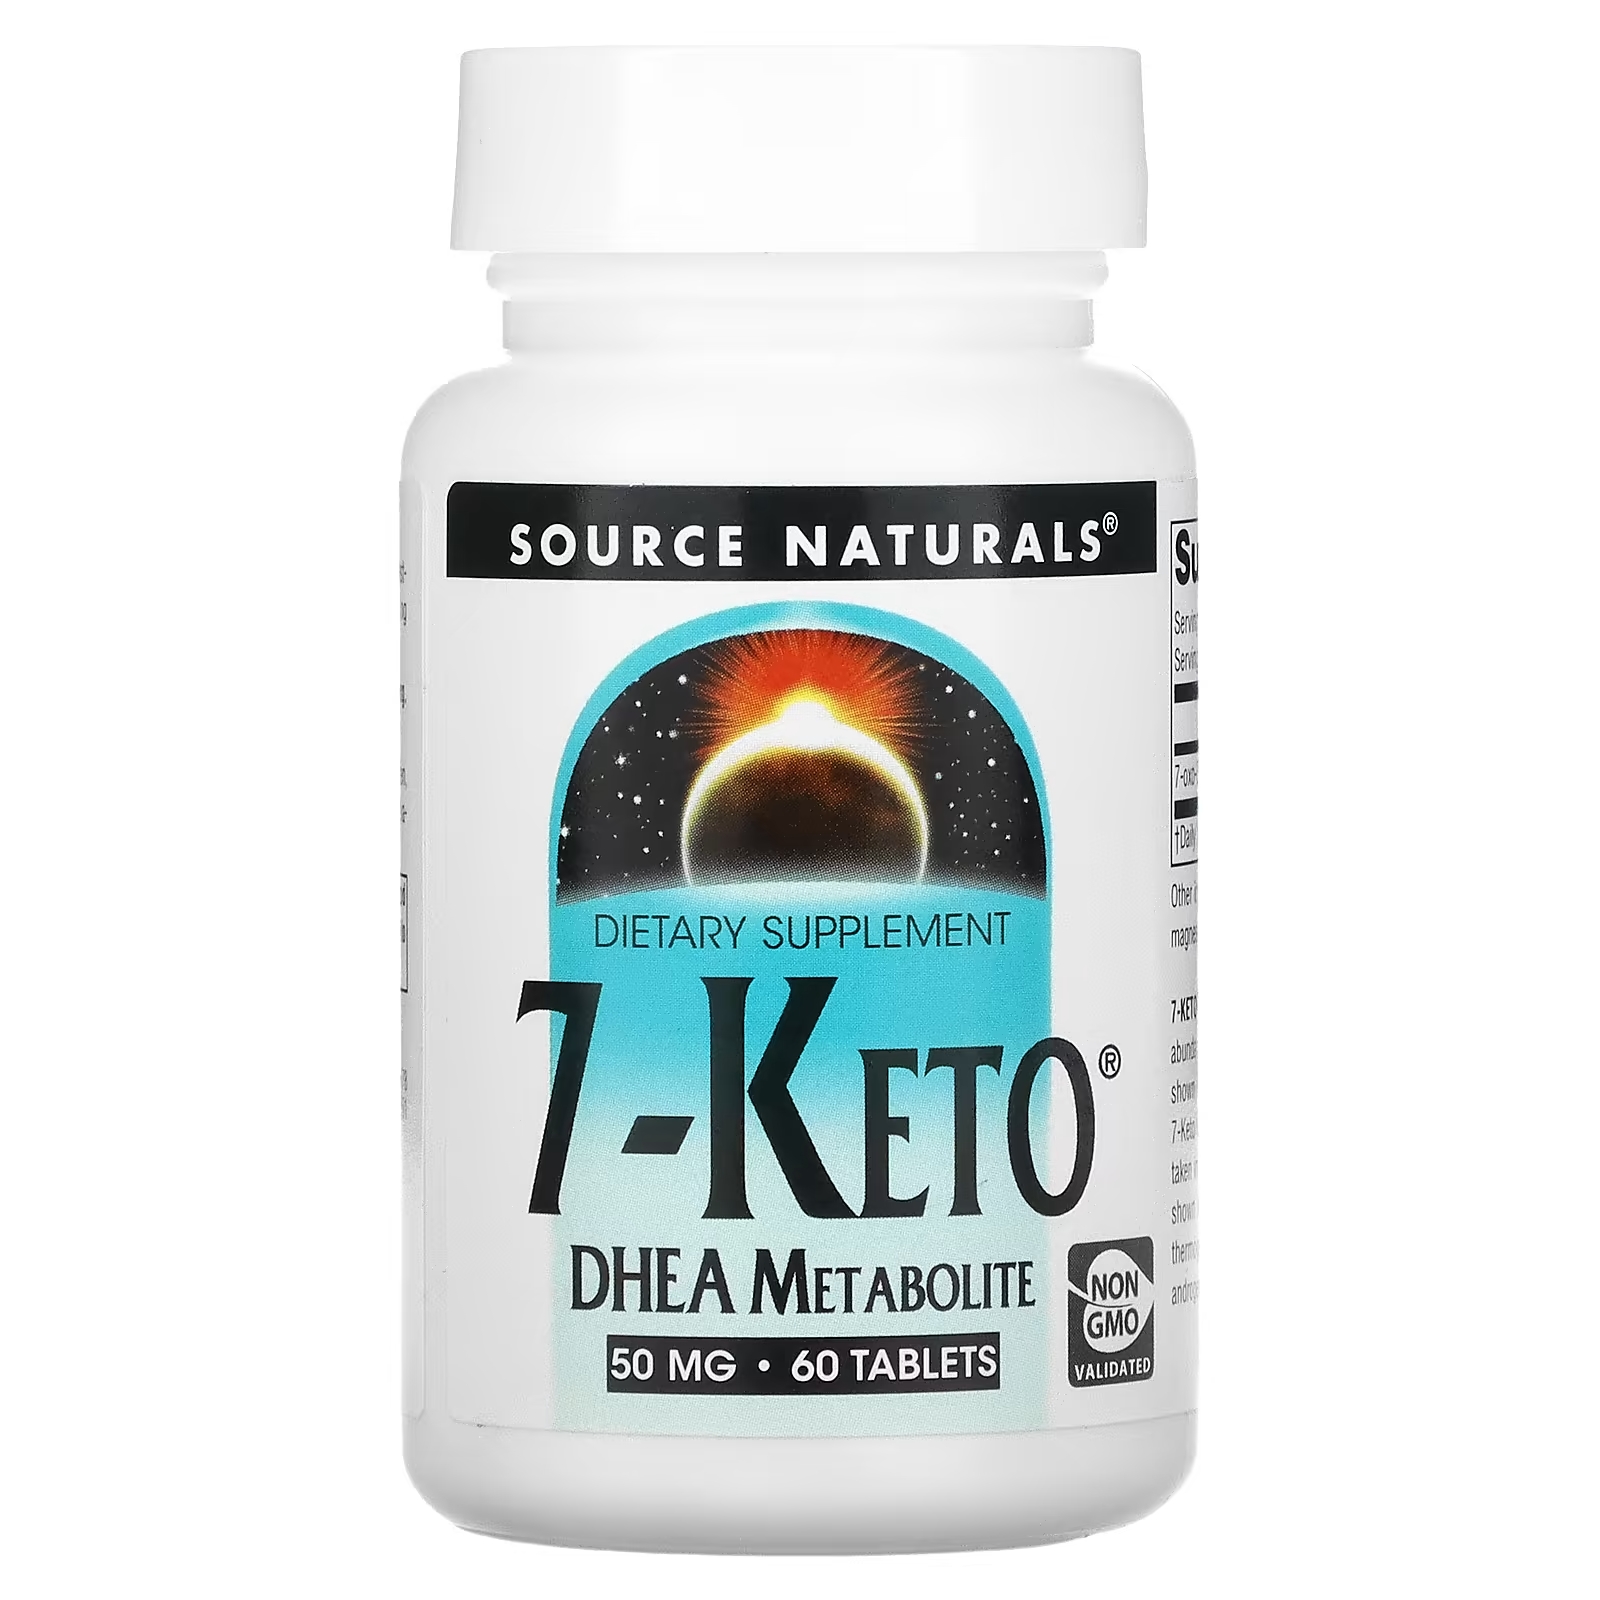 Source Naturals 7-Keto метаболит ДГЭА 50 мг, 60 таблеток